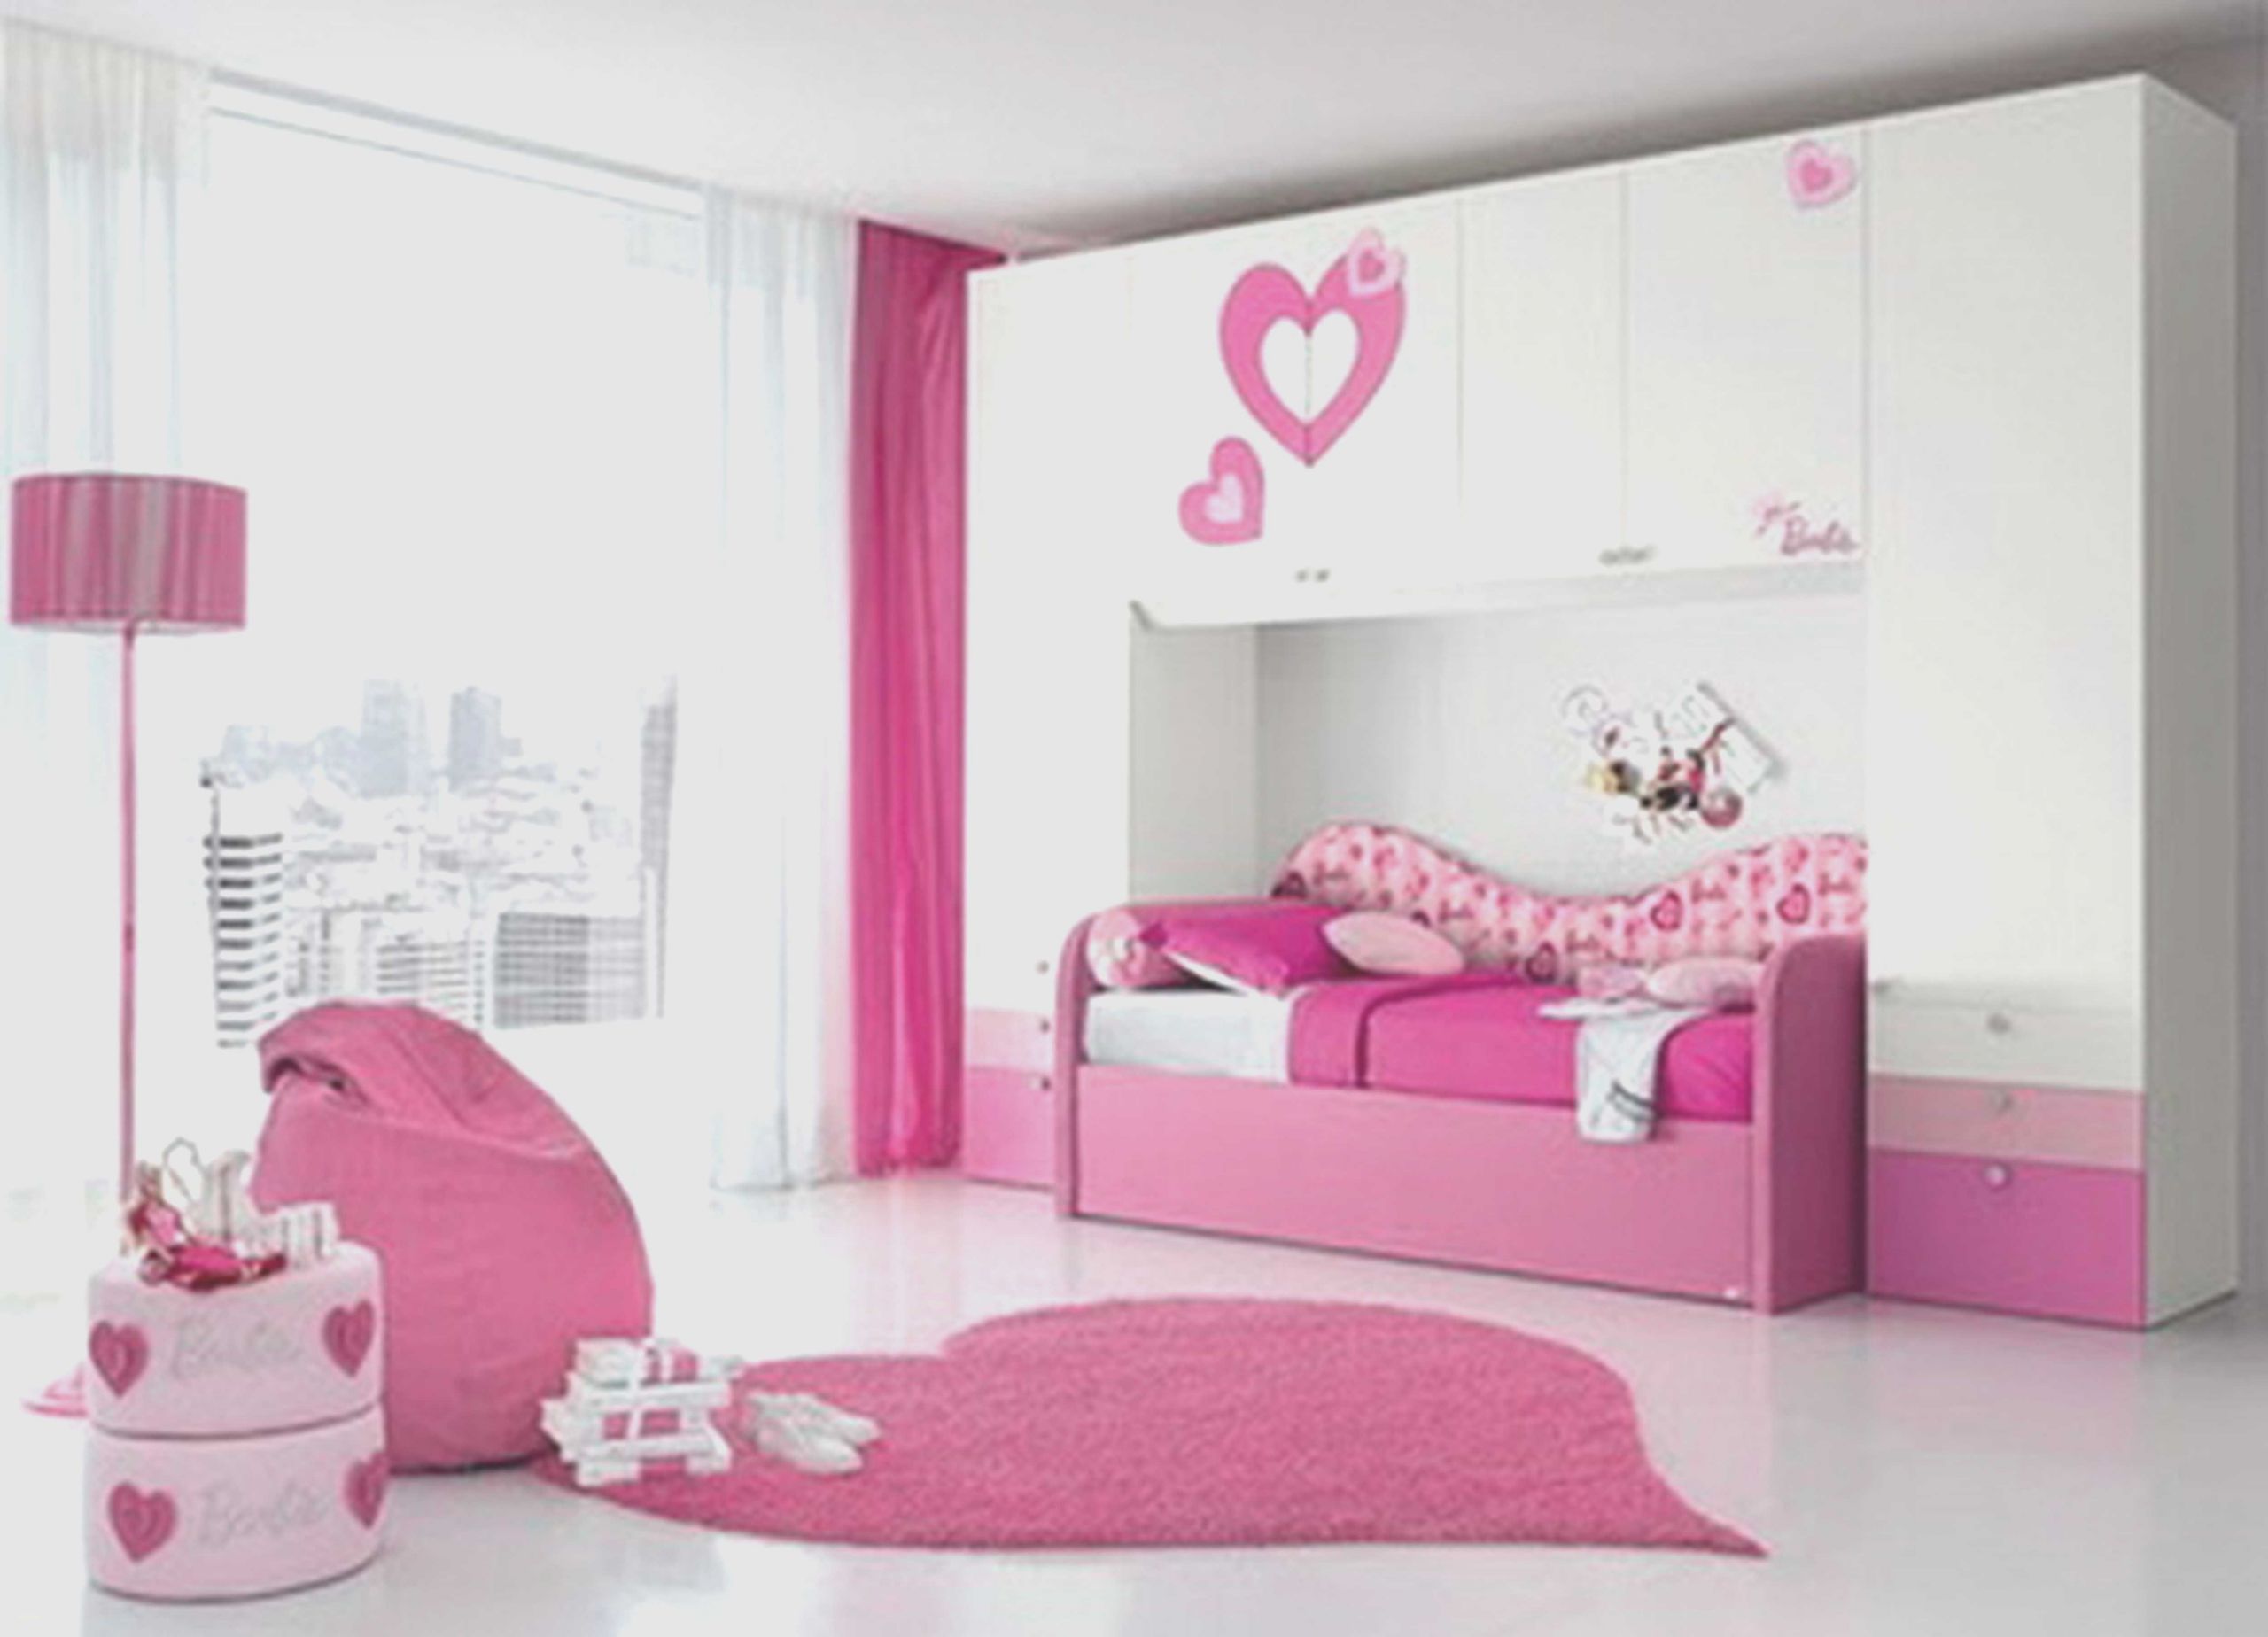 DIY Bedroom Decorations Pinterest
 Best Bedroom Ideas for Teenage Girls Pinterest